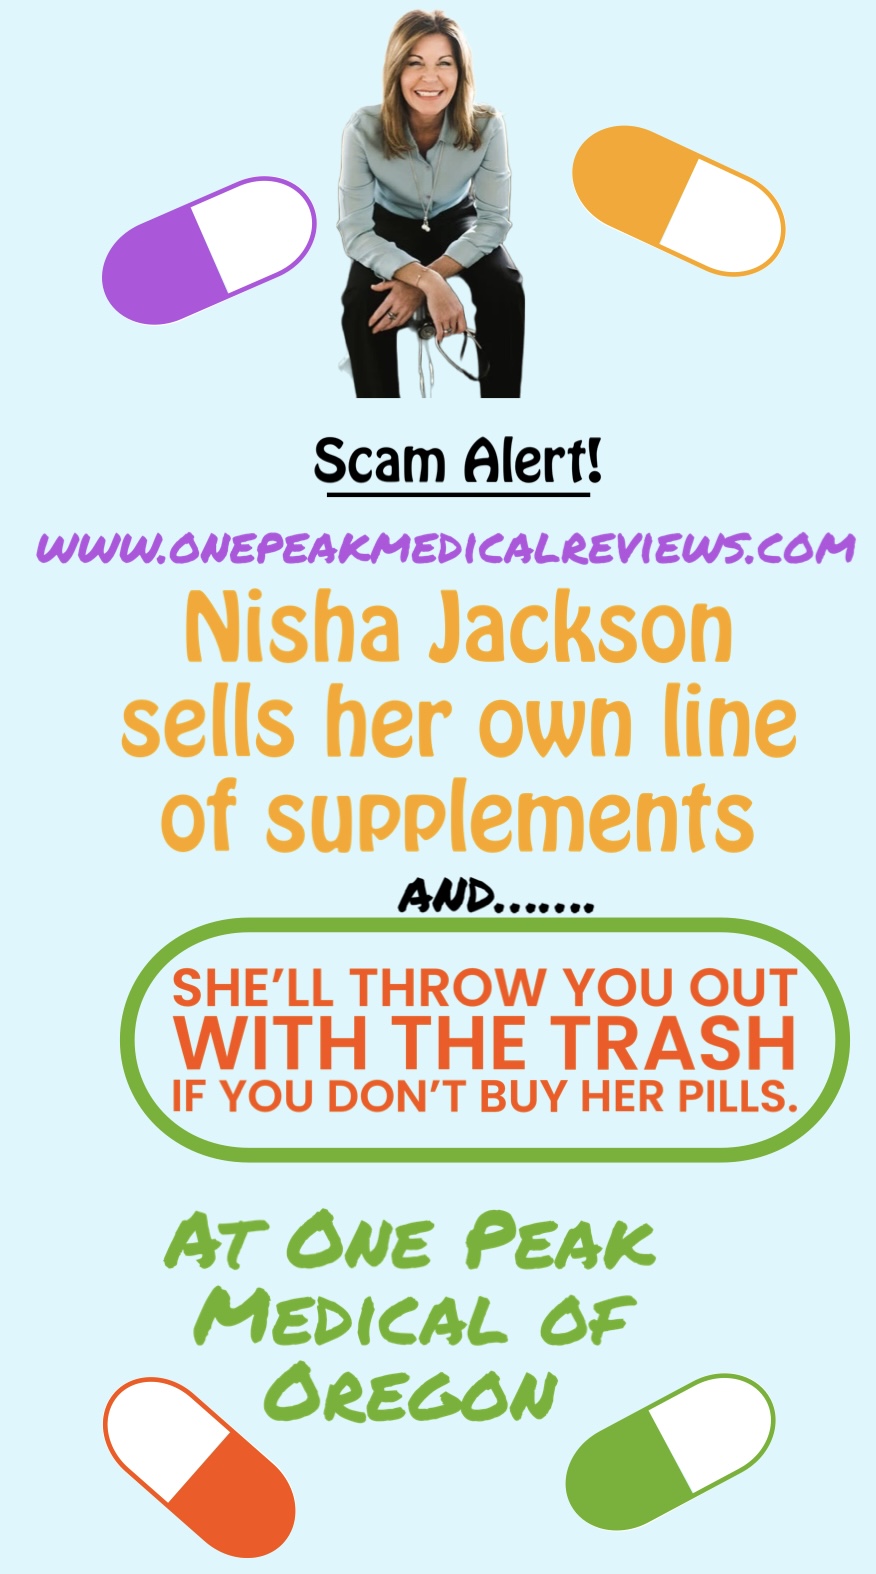 Nisha Jackson is a callous woman